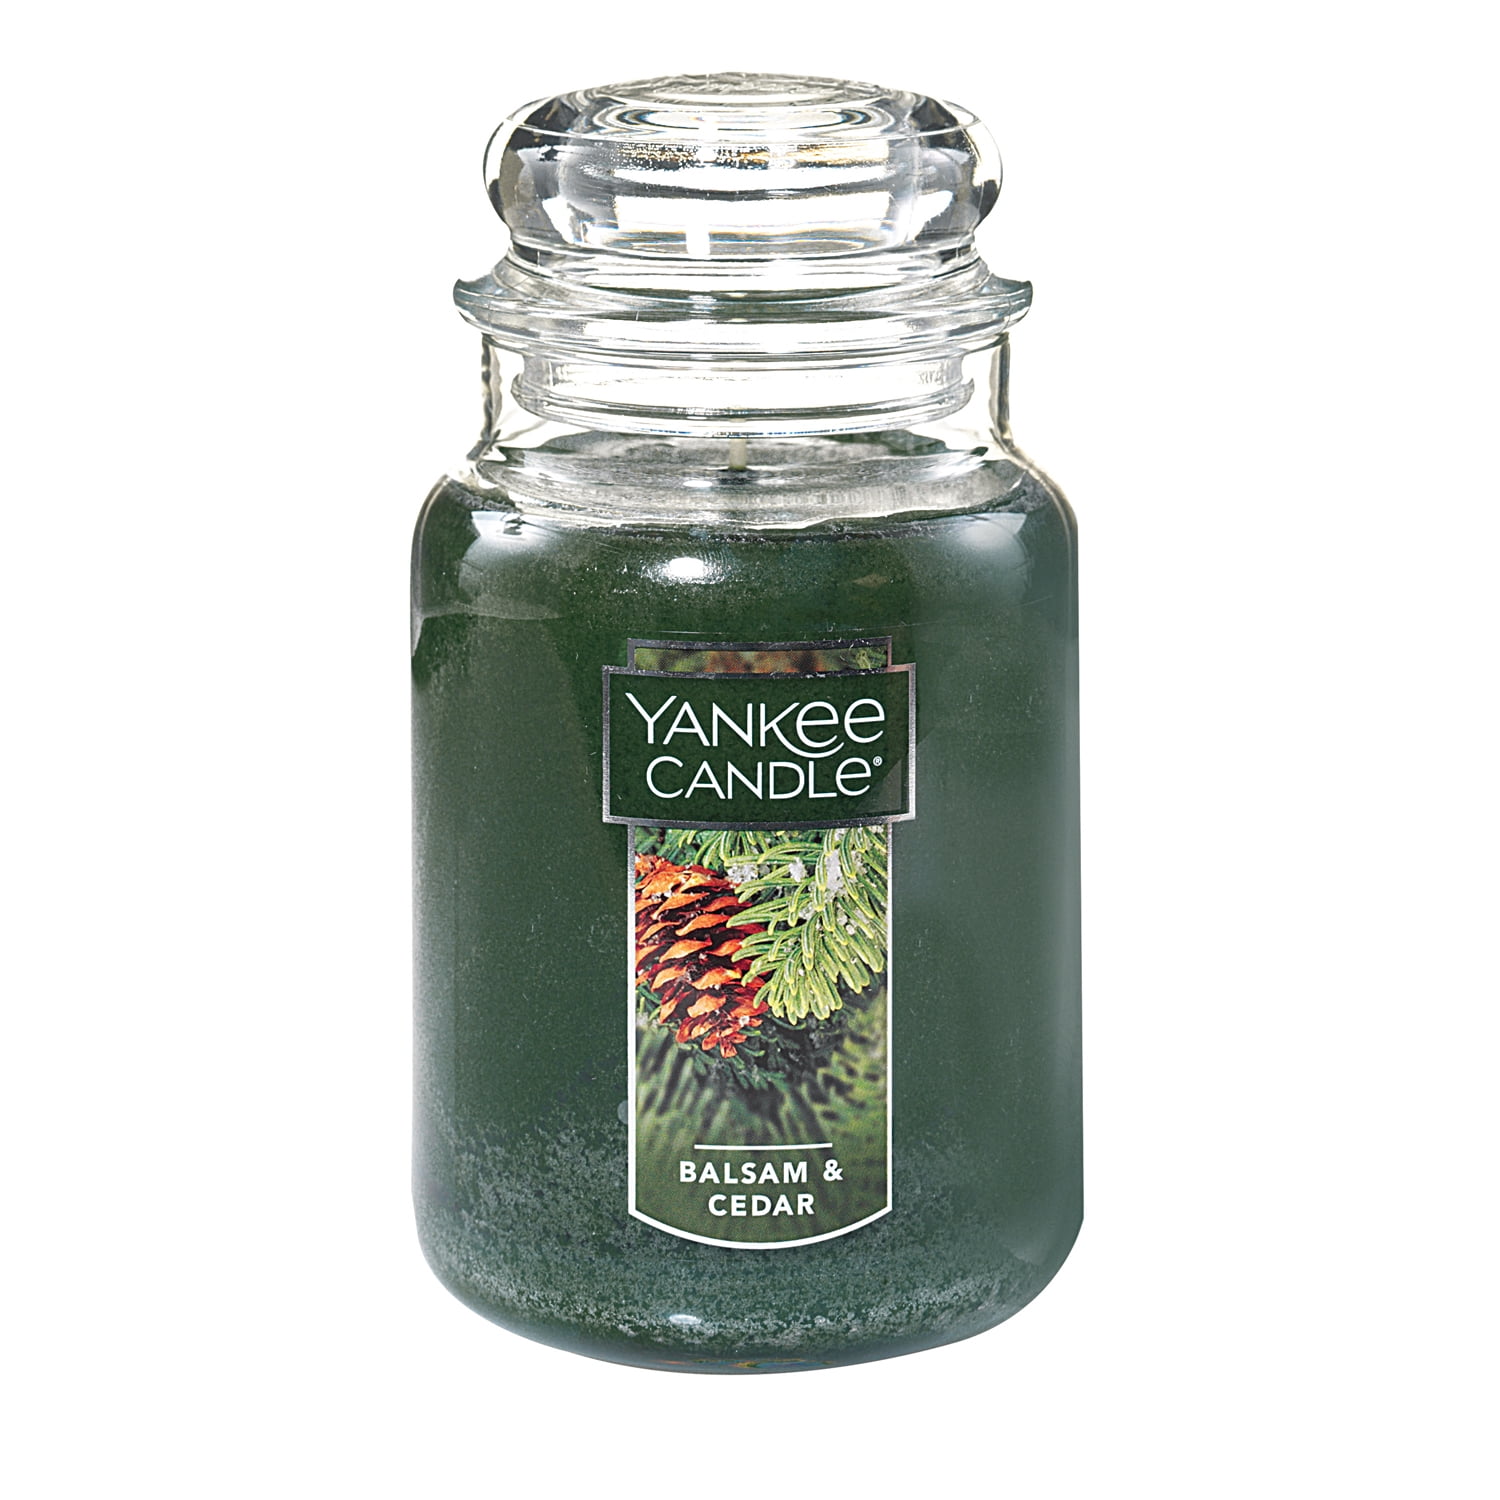 Yankee Candle Balsam & Cedar - 22 oz Original Large Jar Fall Candle